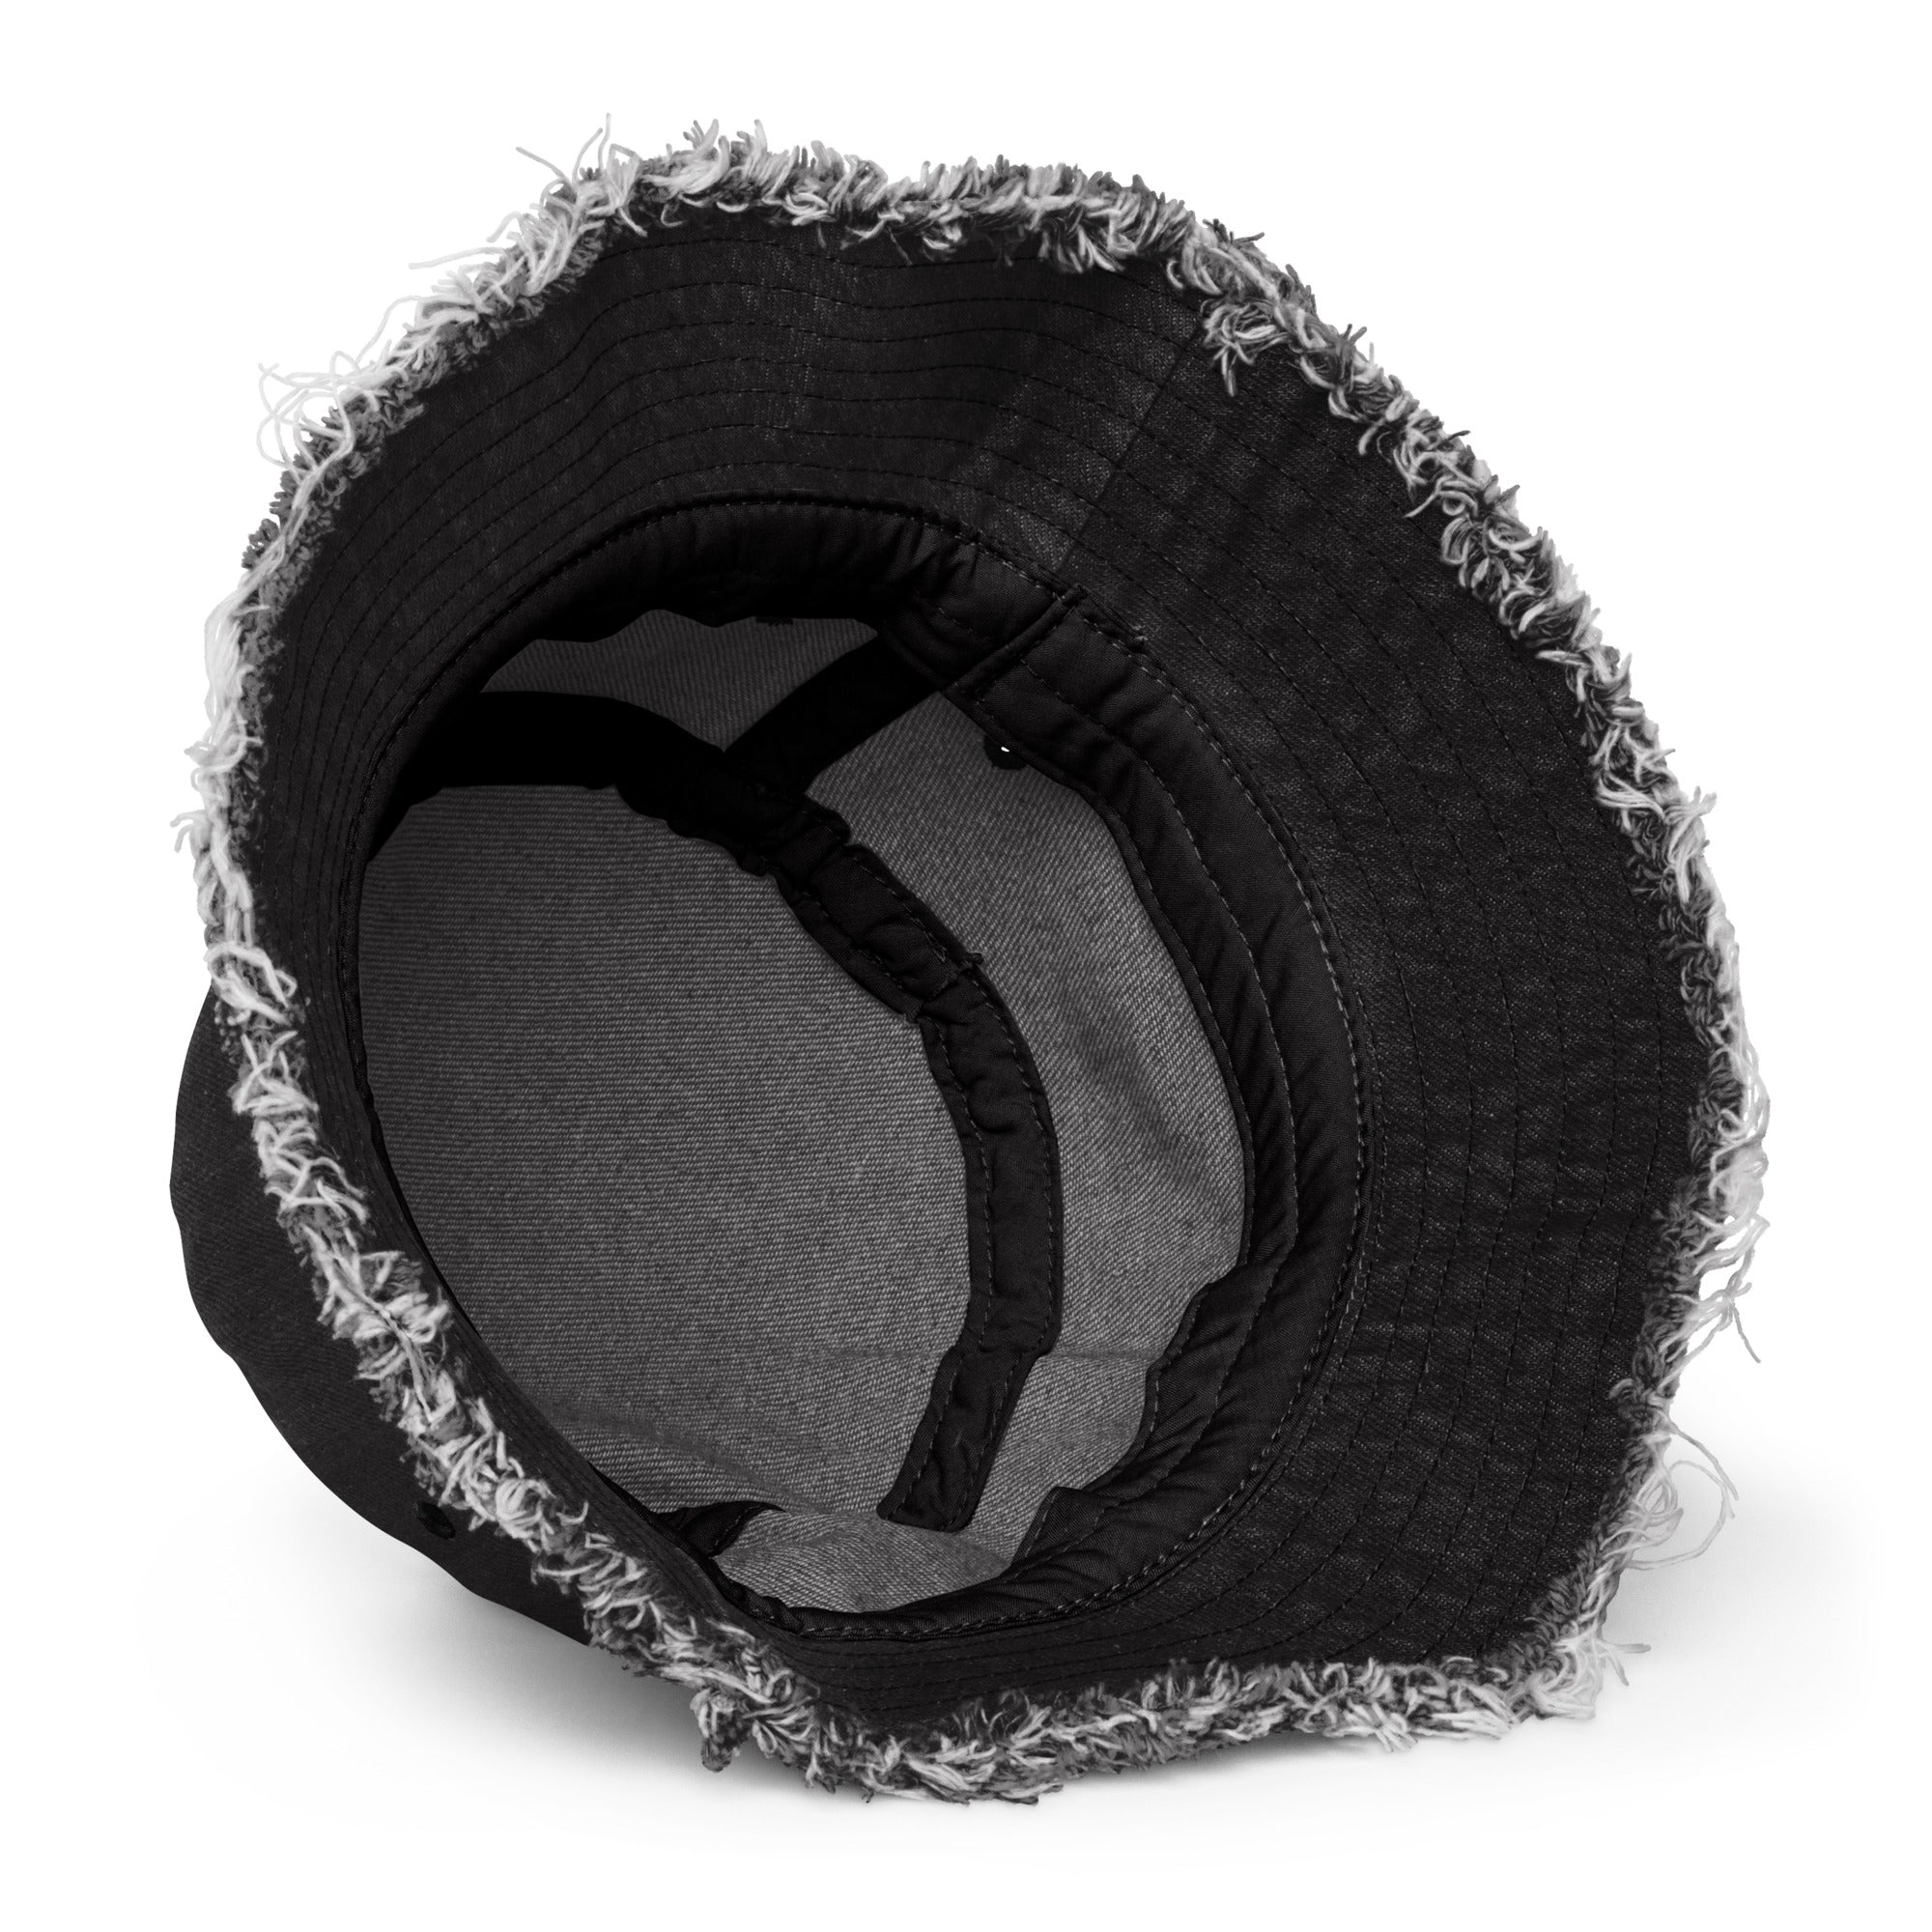 Spiral Snake Embroidered Distressed Denim Bucket Hat